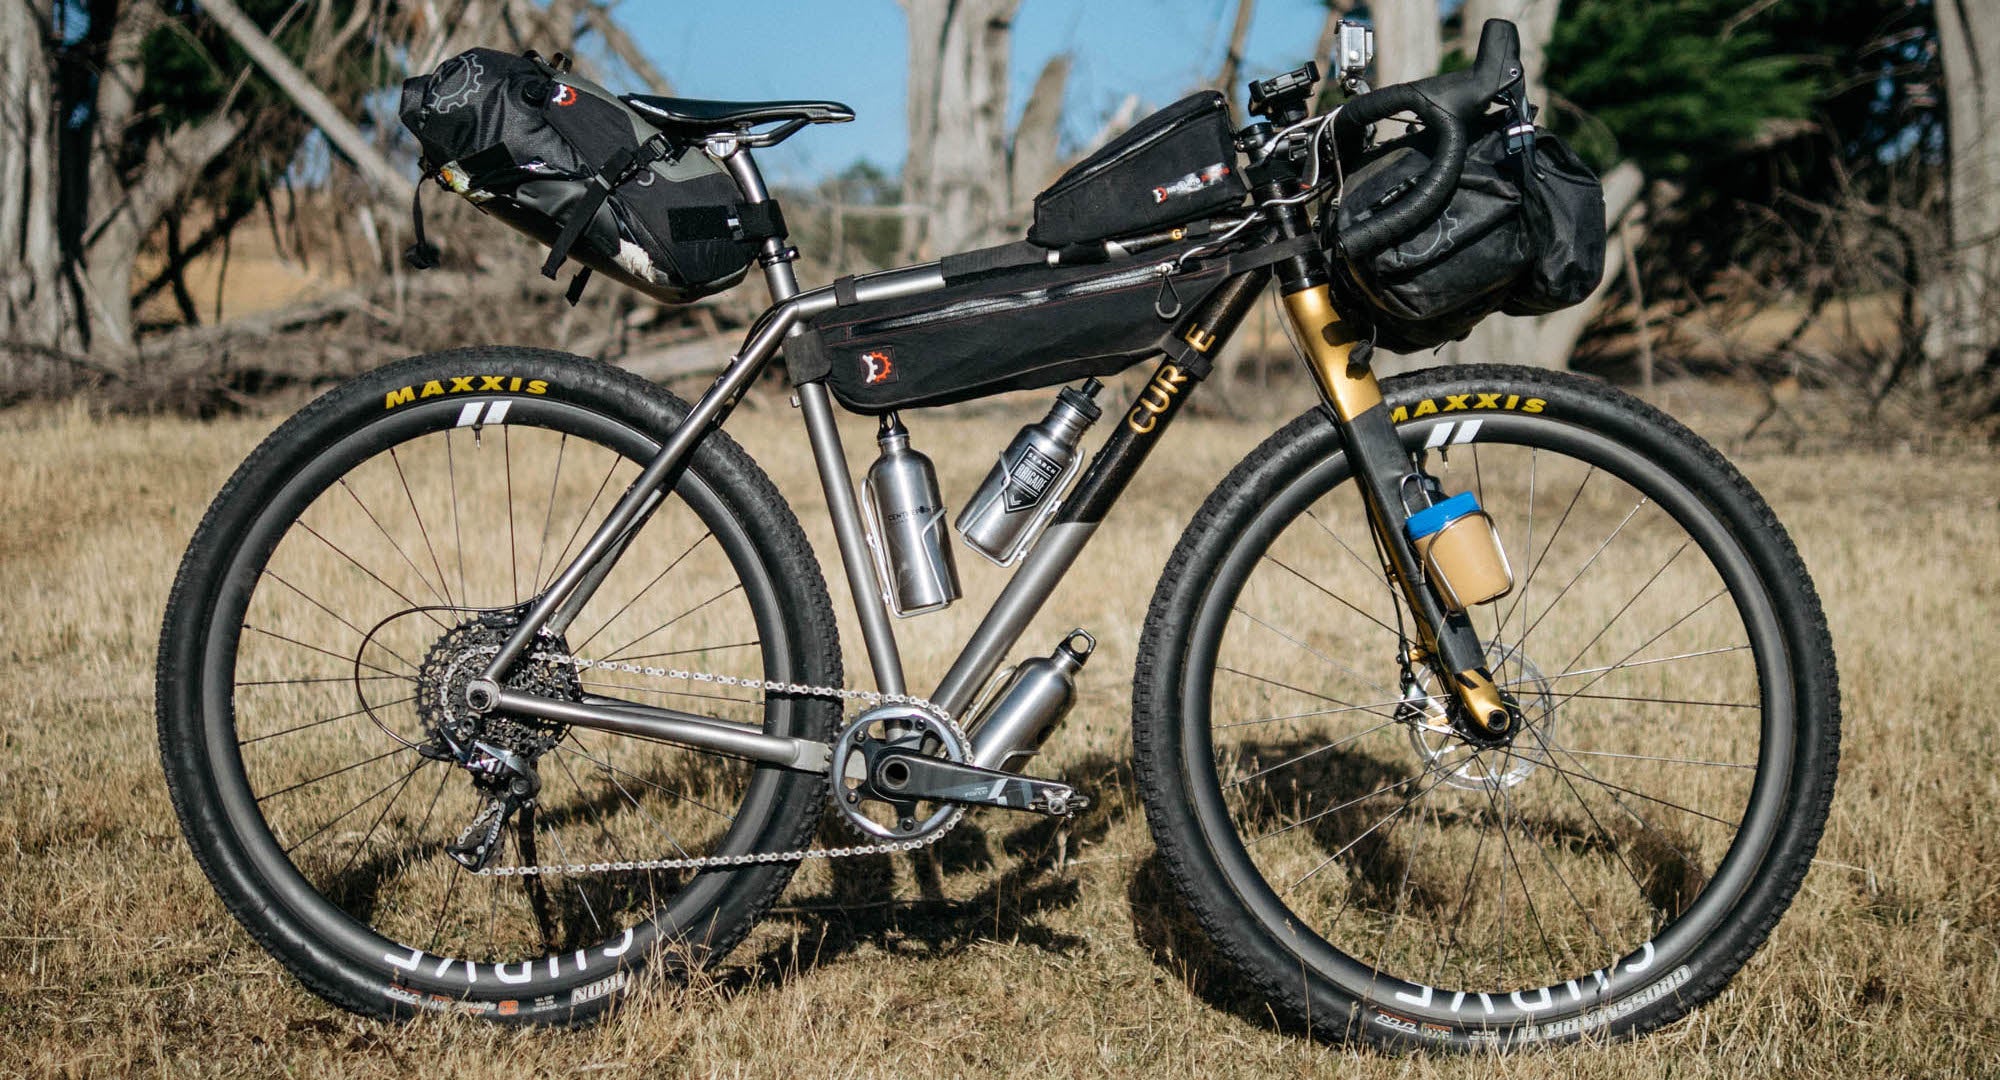 Photo credit: Bikepacking.com (https://bikepacking.com/bikes/curve-gmx-review/)